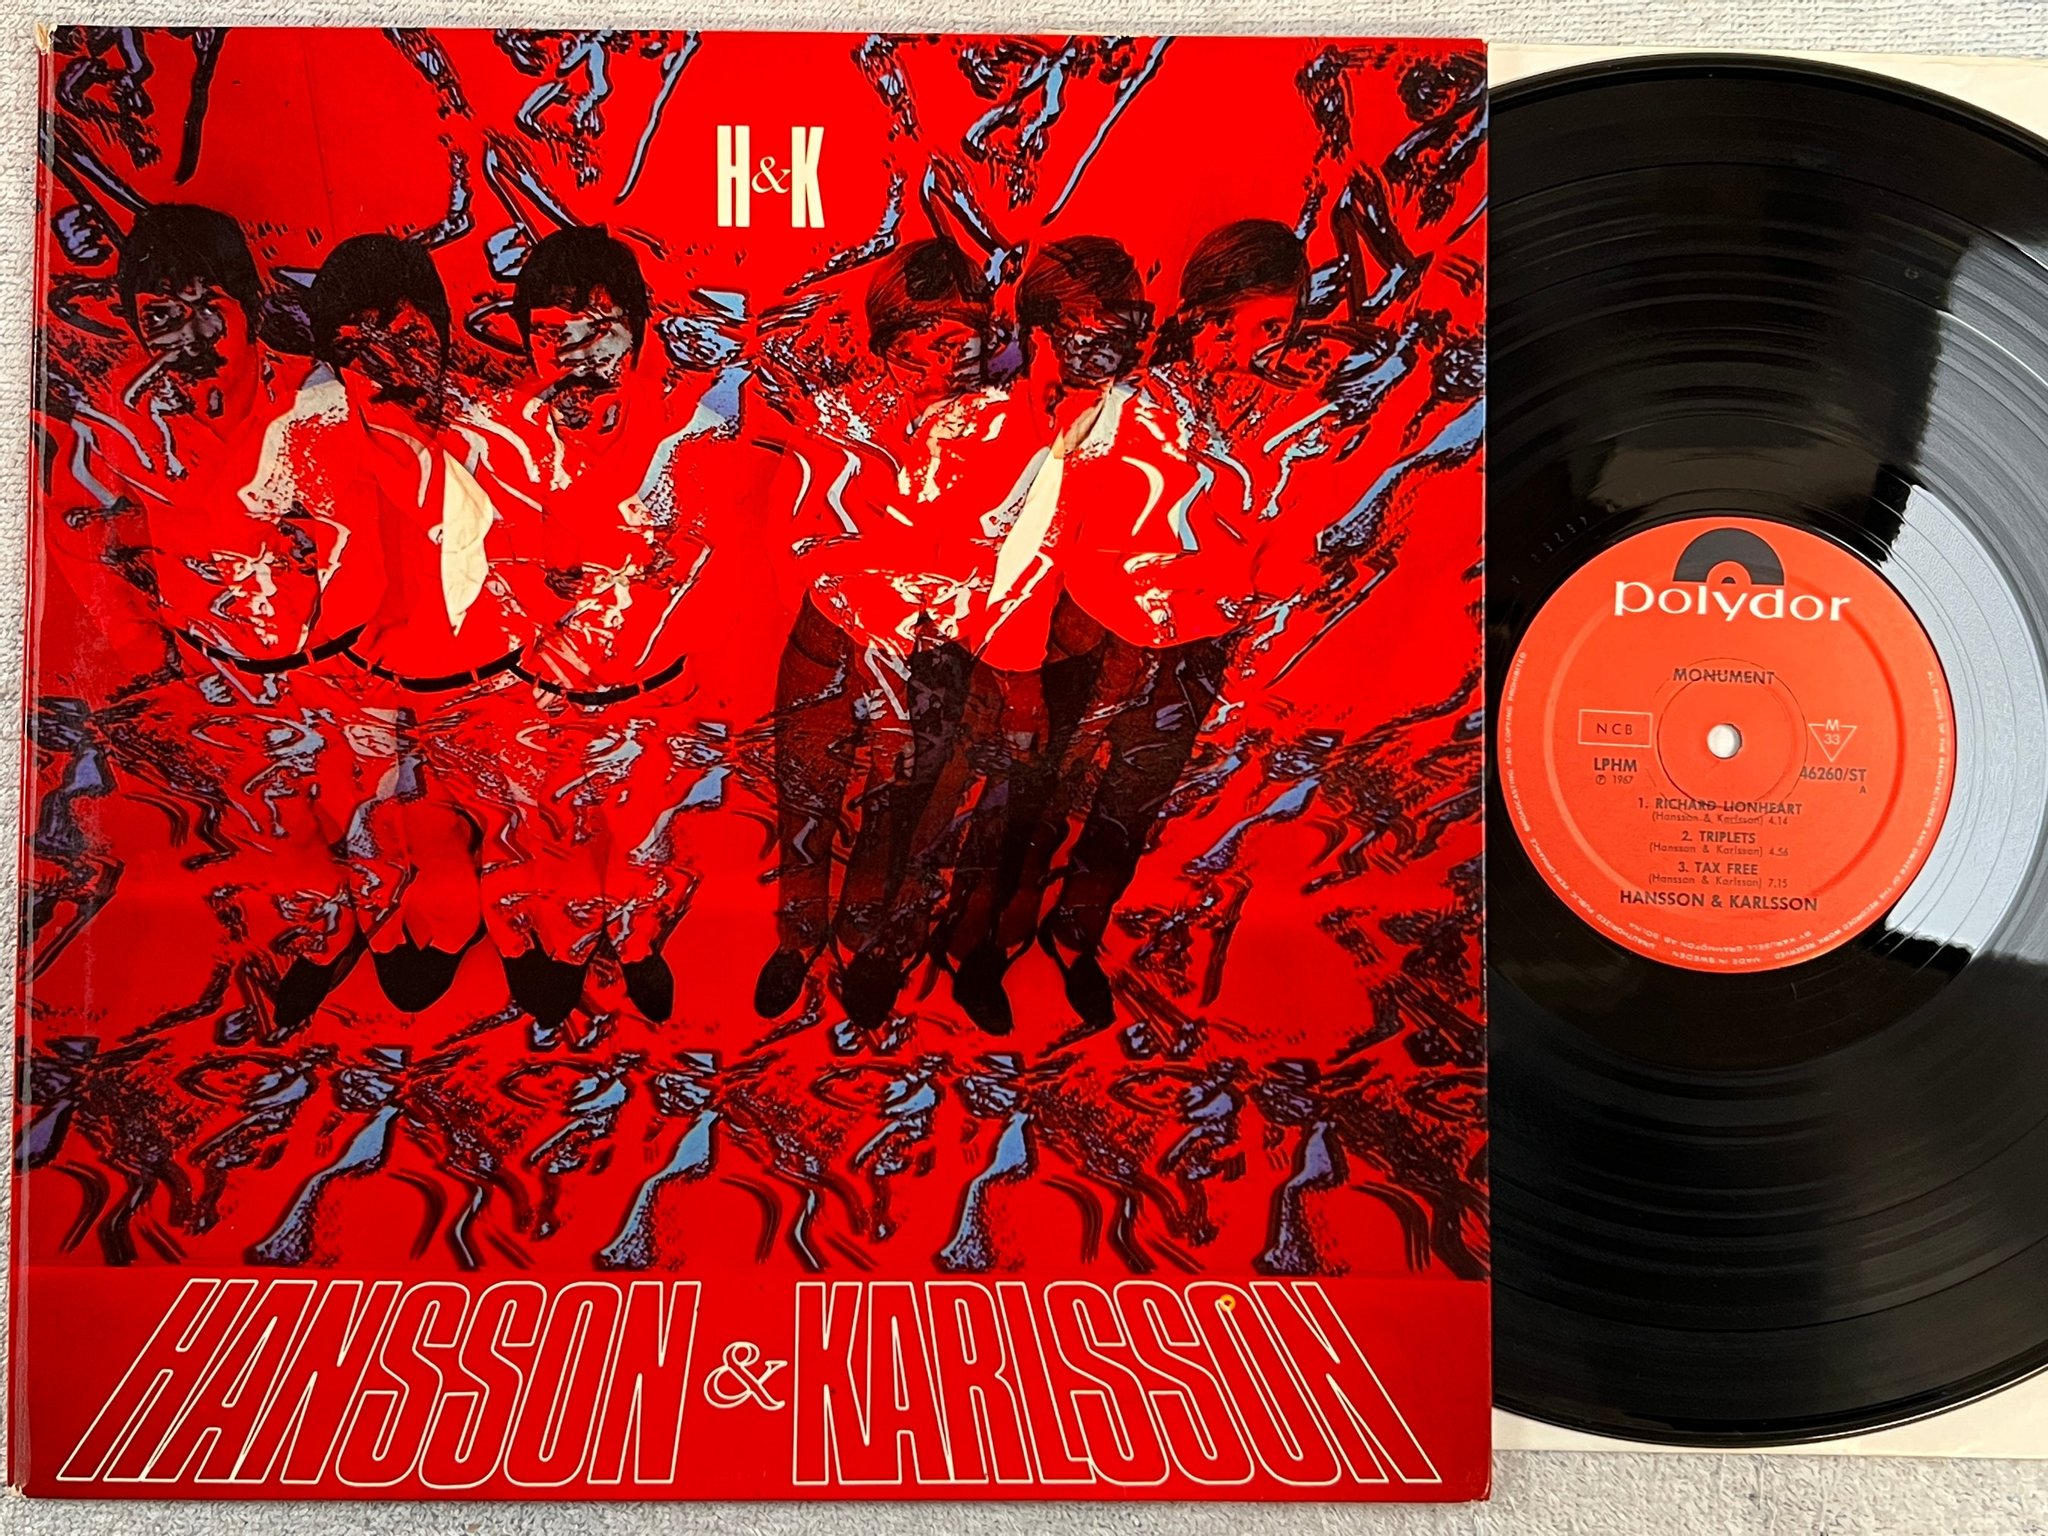 Omslagsbild för skivan HANSSON & KARLSSON monument LP -67 swe  POLYDOR 46260 ST ** classic **